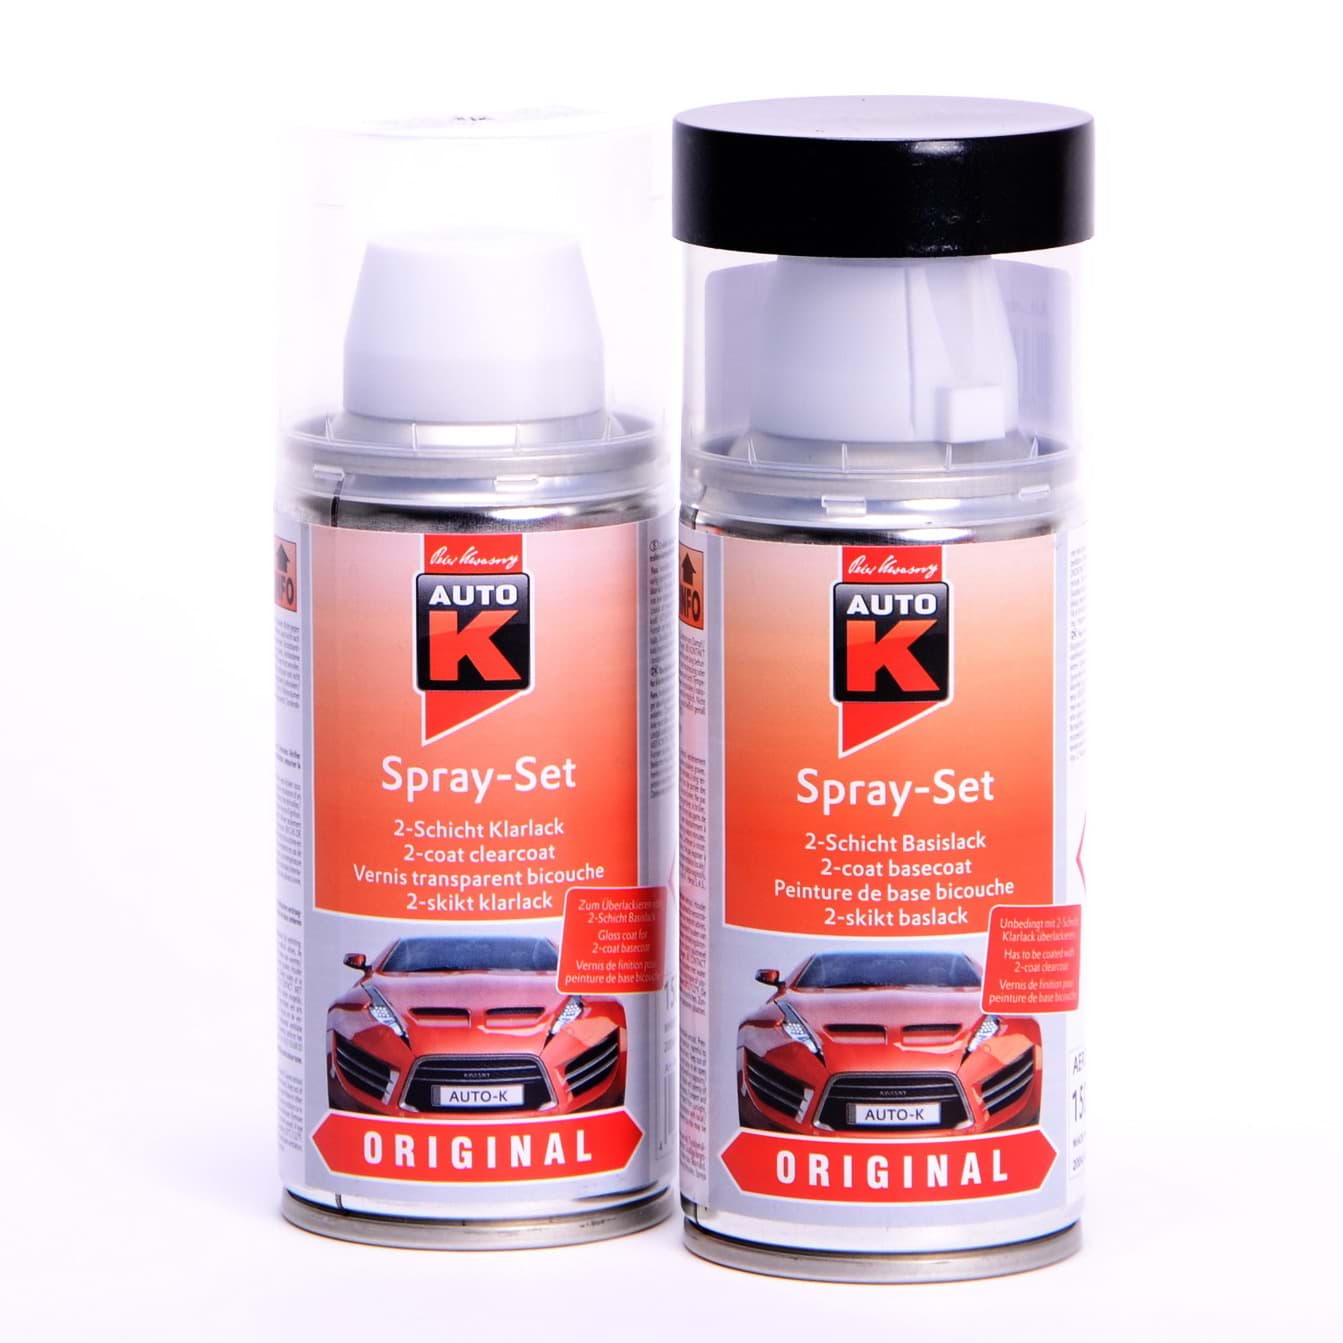 Afbeelding van Auto-K Spray-Set Autolack für Opel 140 Rauchgrau met 21375